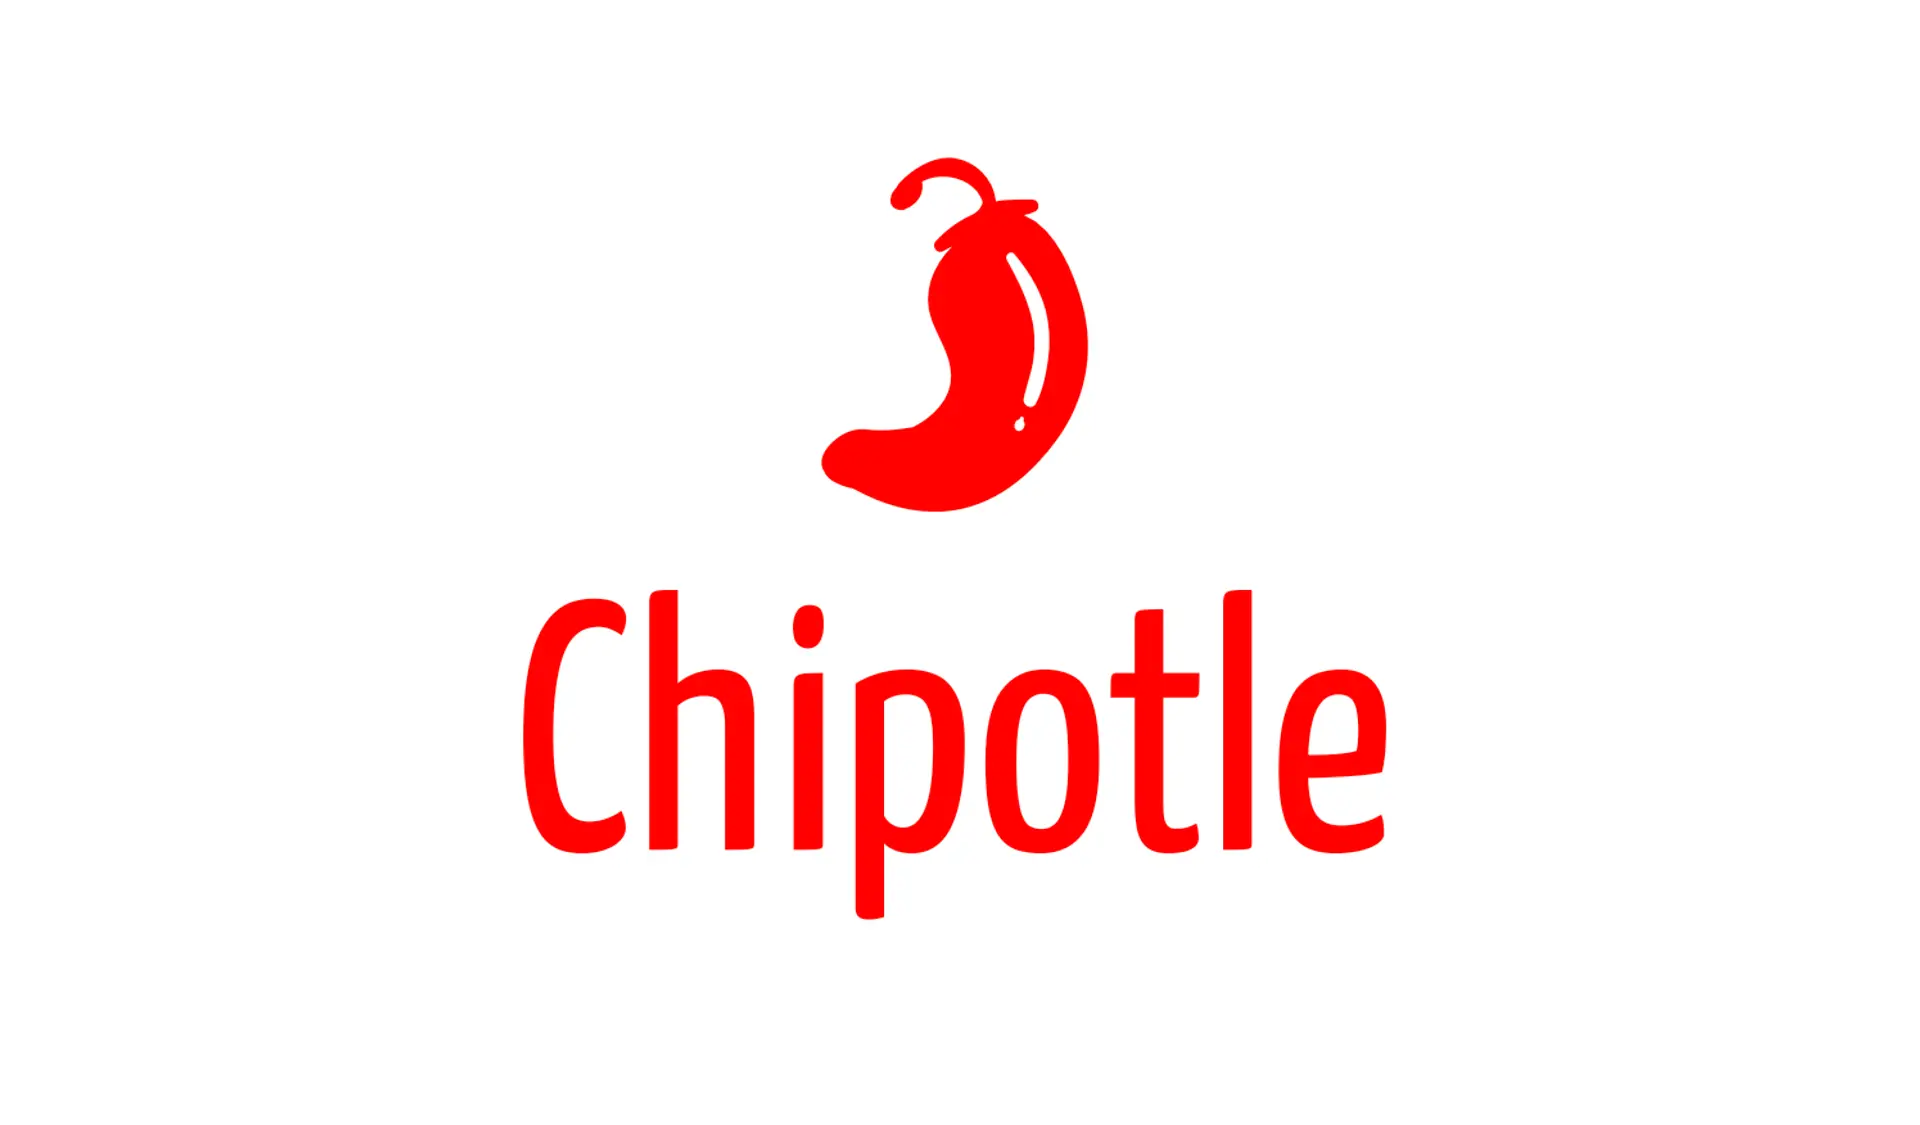 Chipotle logo variation